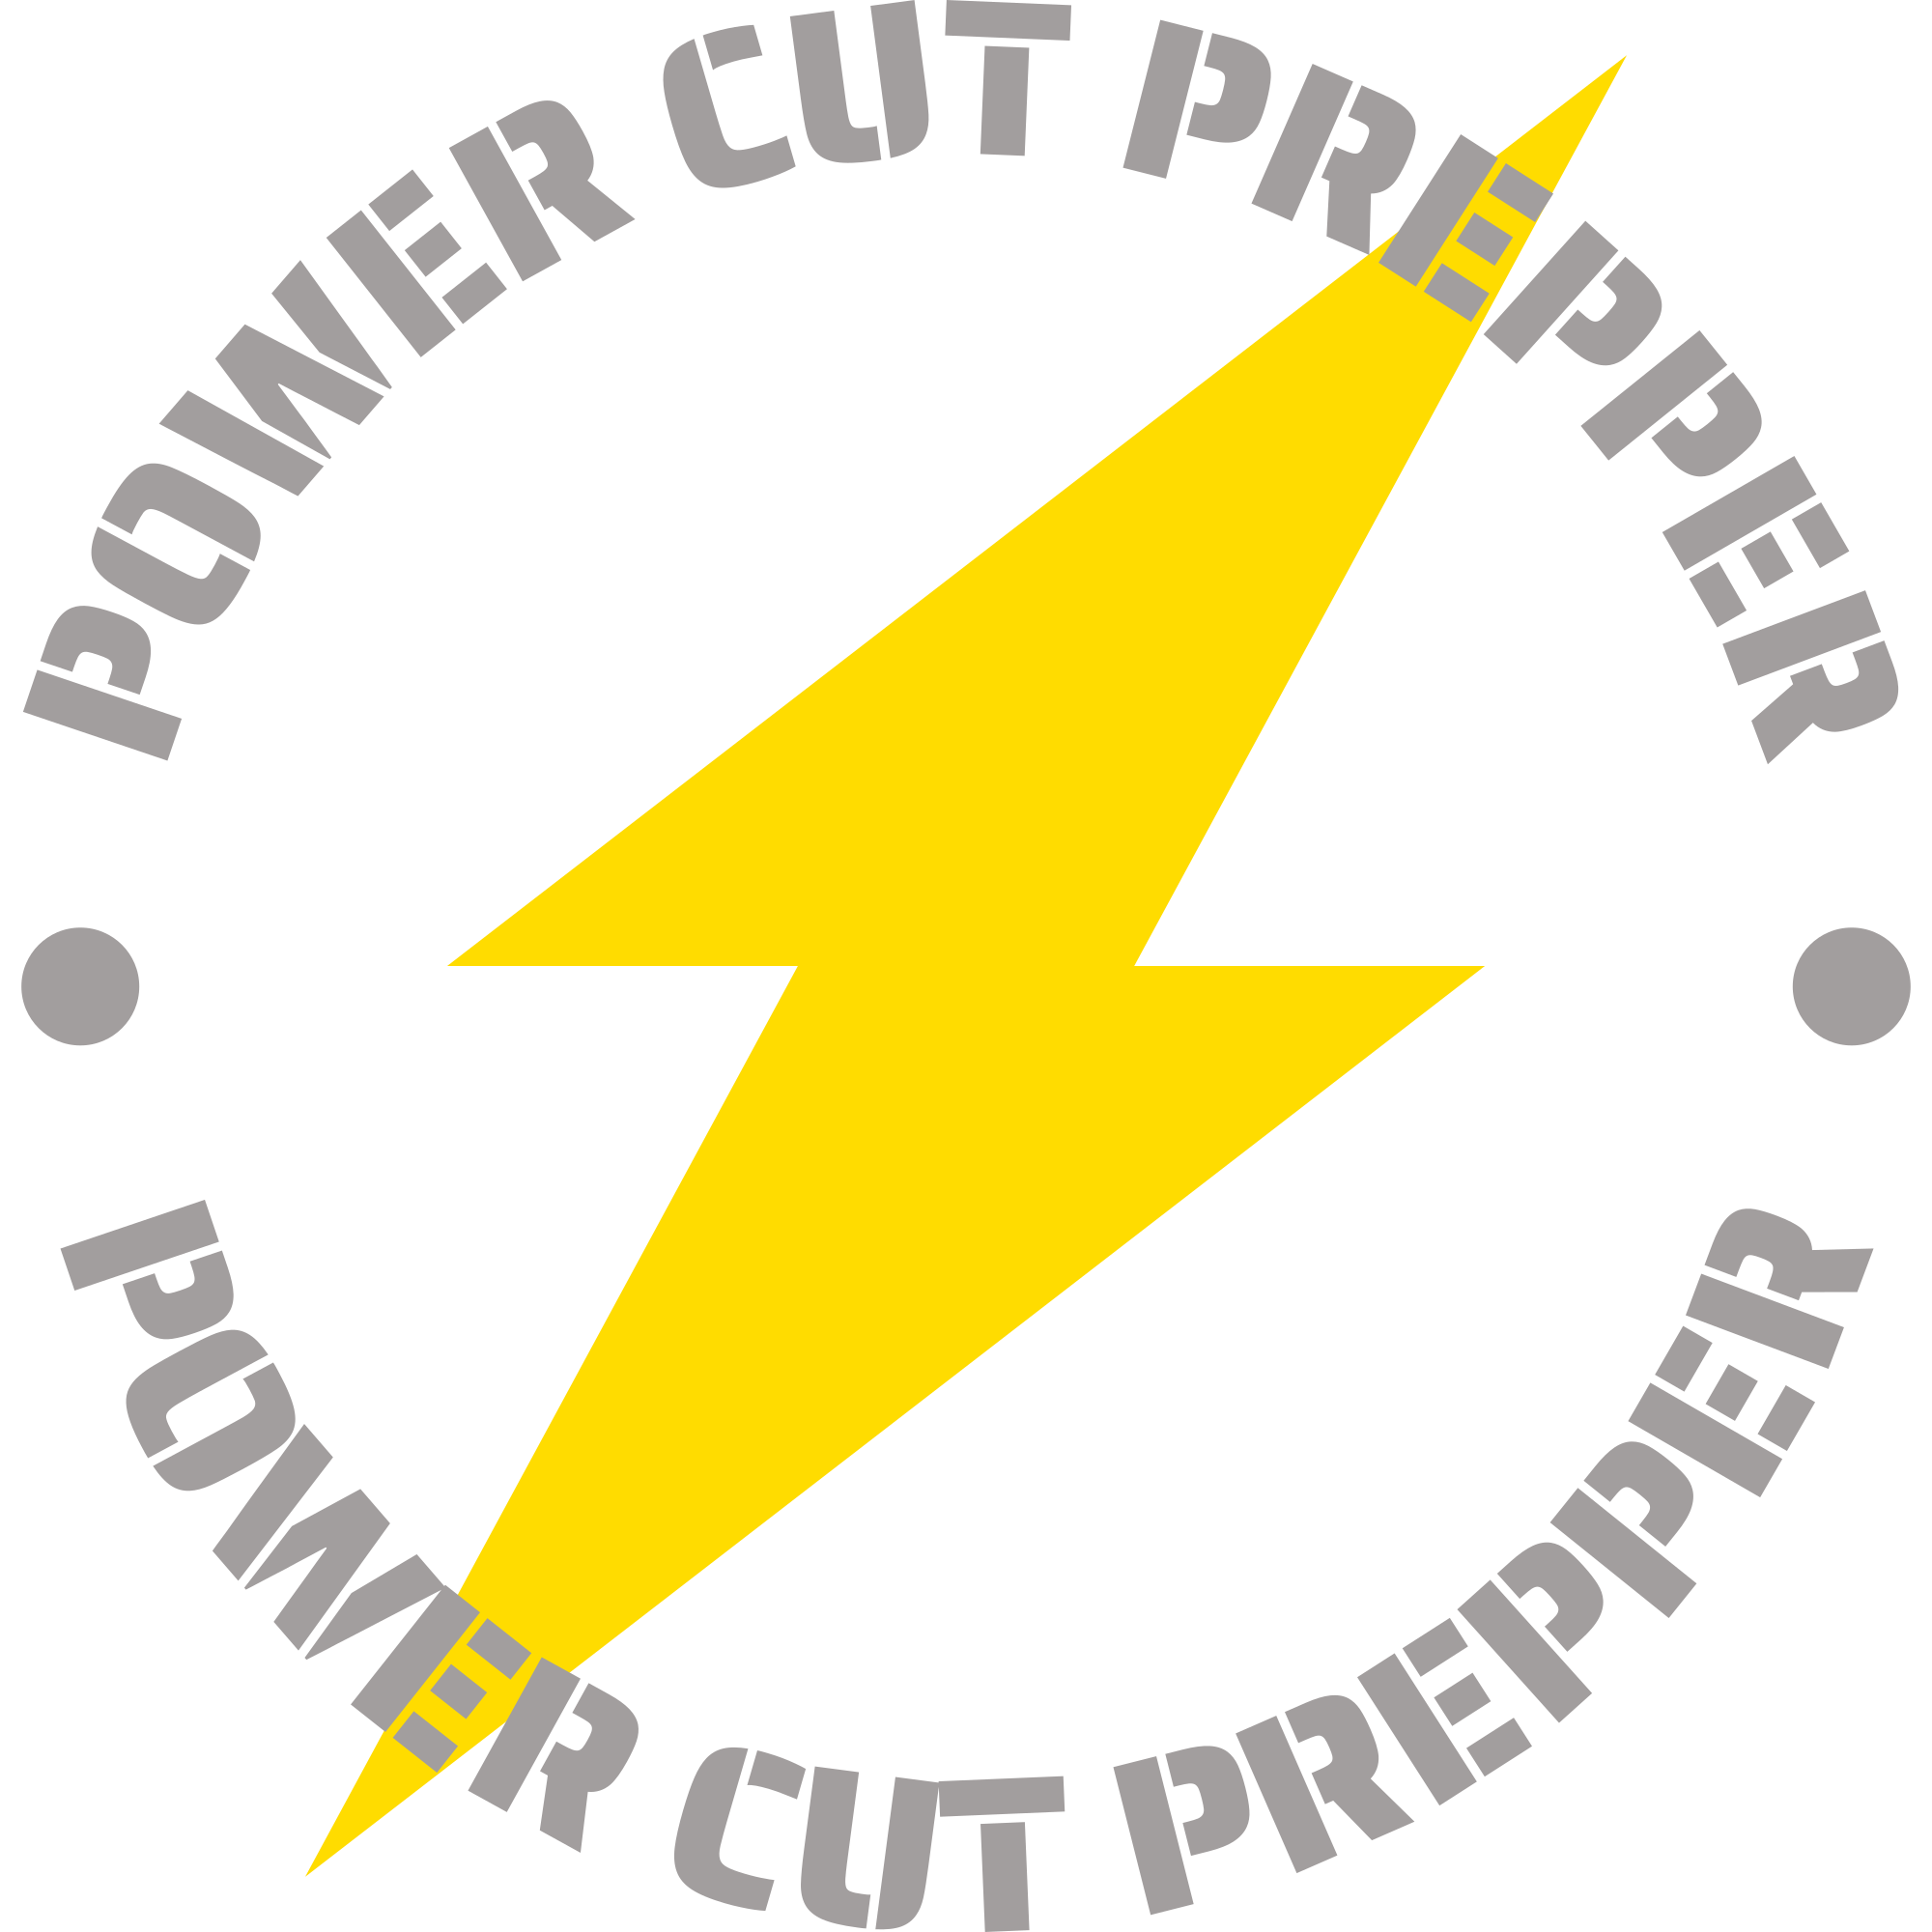 Power Cut Prepper